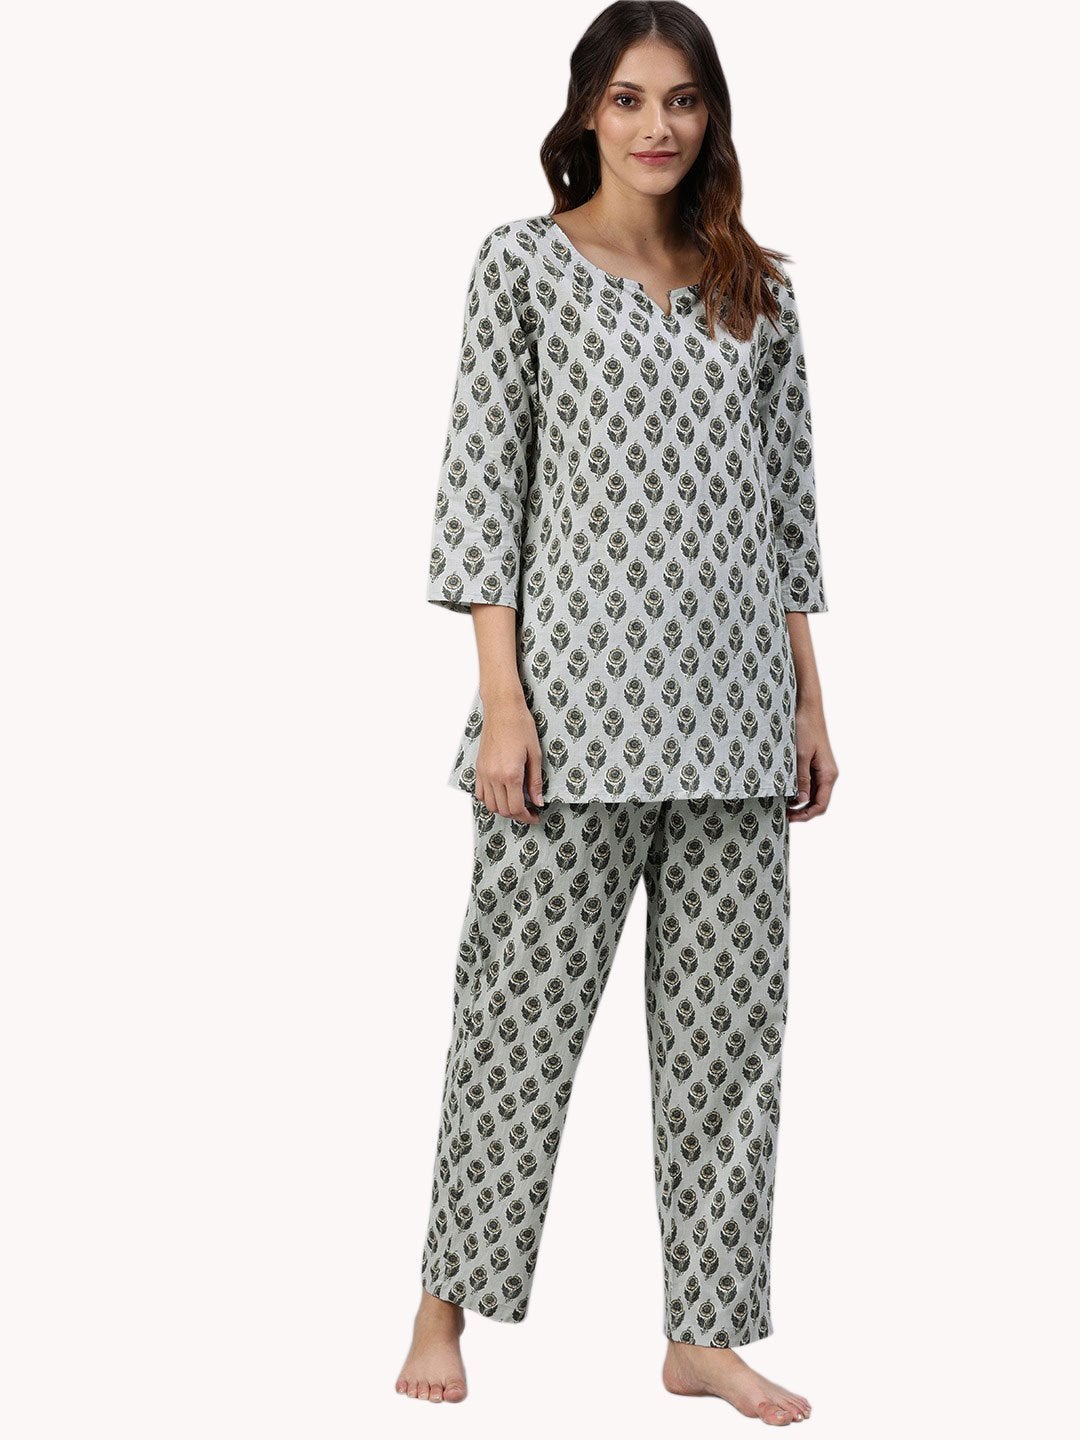 Women's Grey Color Cotton Loungewear/Nightwear - Noz2Toz